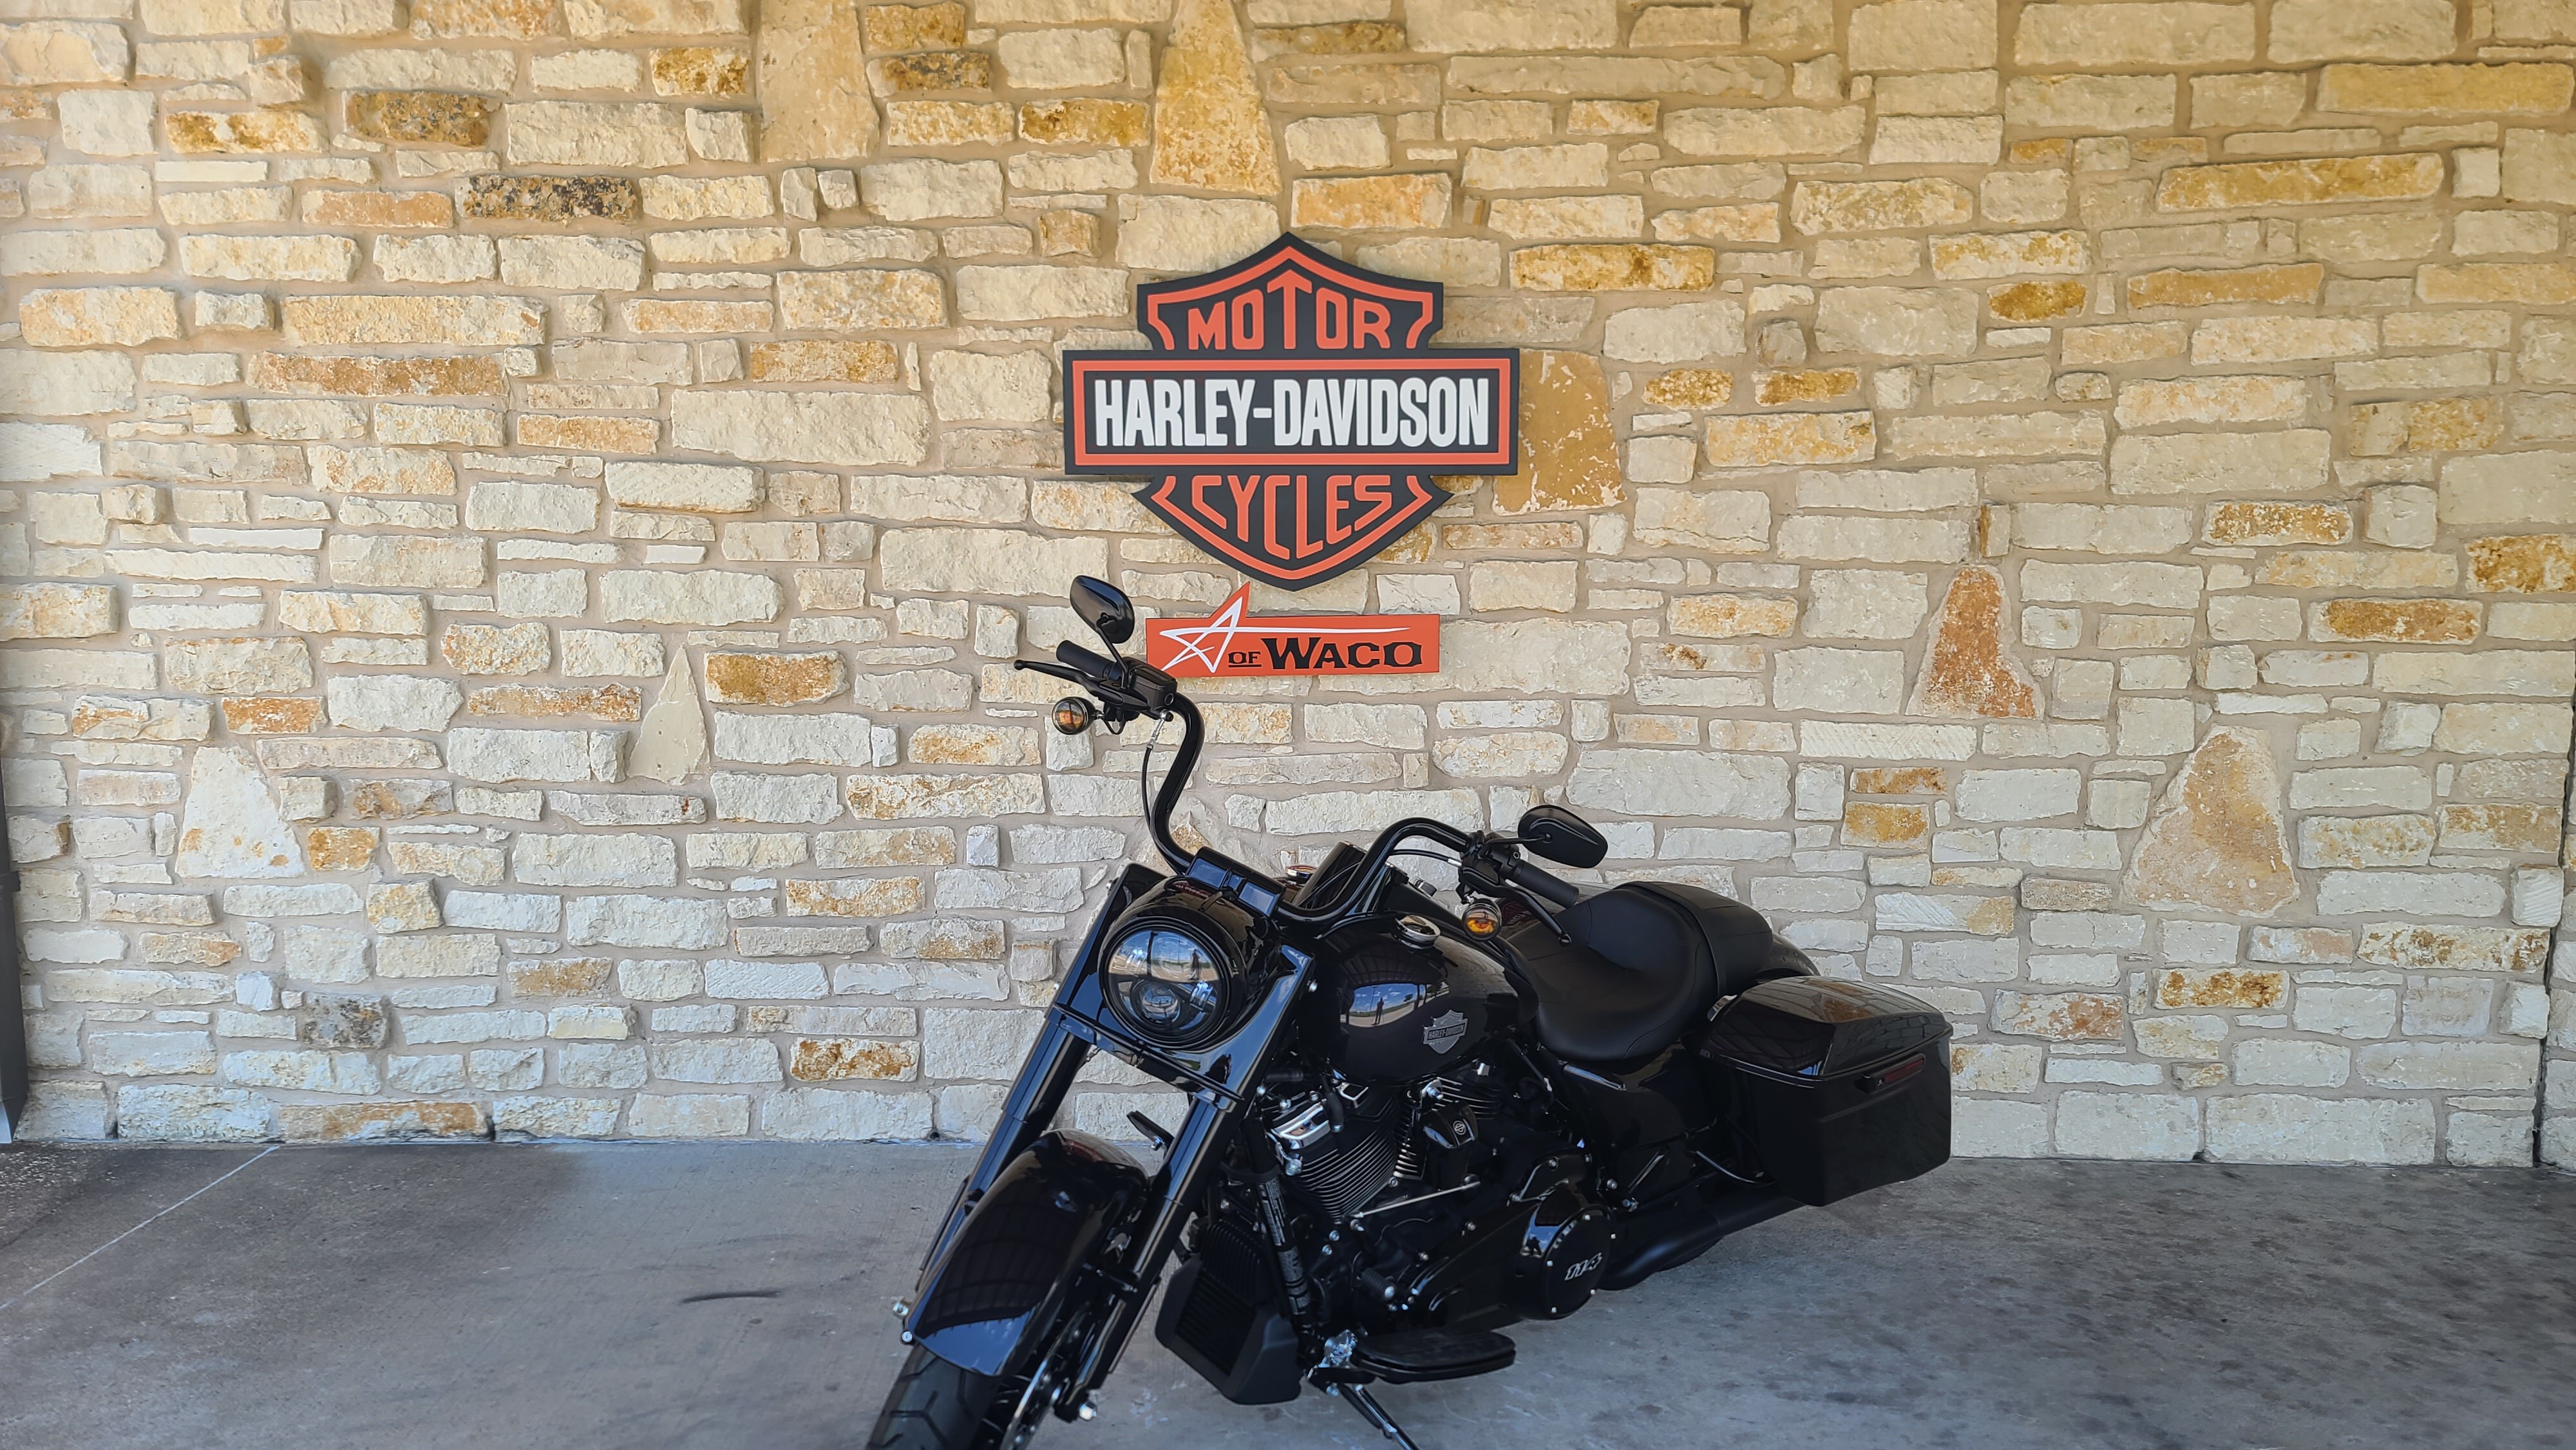 2021 Harley-Davidson Touring FLHRXS Road King Special at Harley-Davidson of Waco